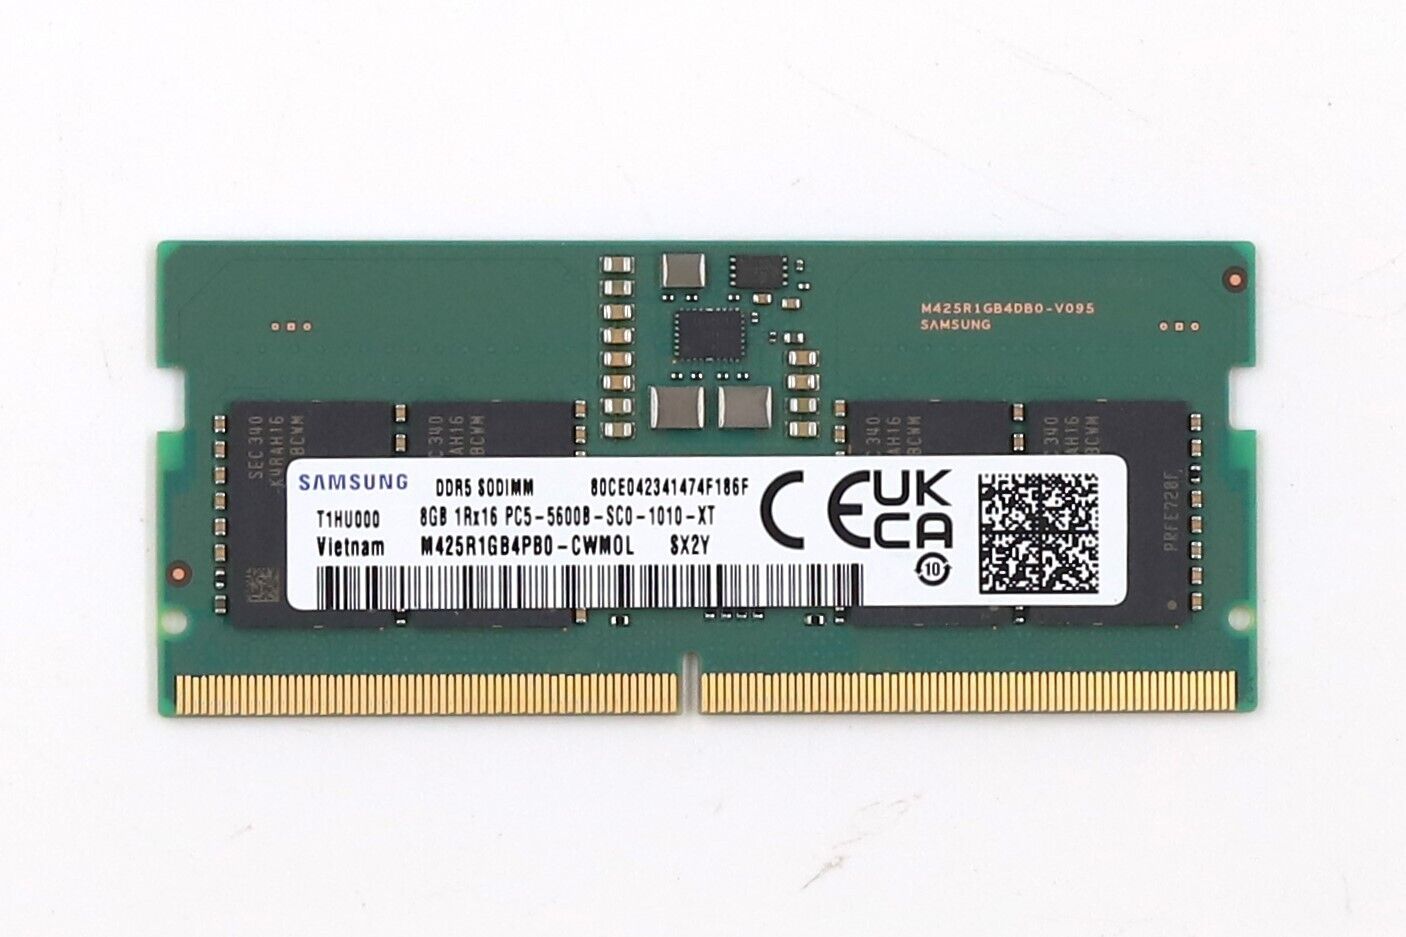 Samsung 8GB 1Rx16 PC5-5600B-SC0-1010-XT Laptop Memory M425R1GB4PB0-CWM0L Tested